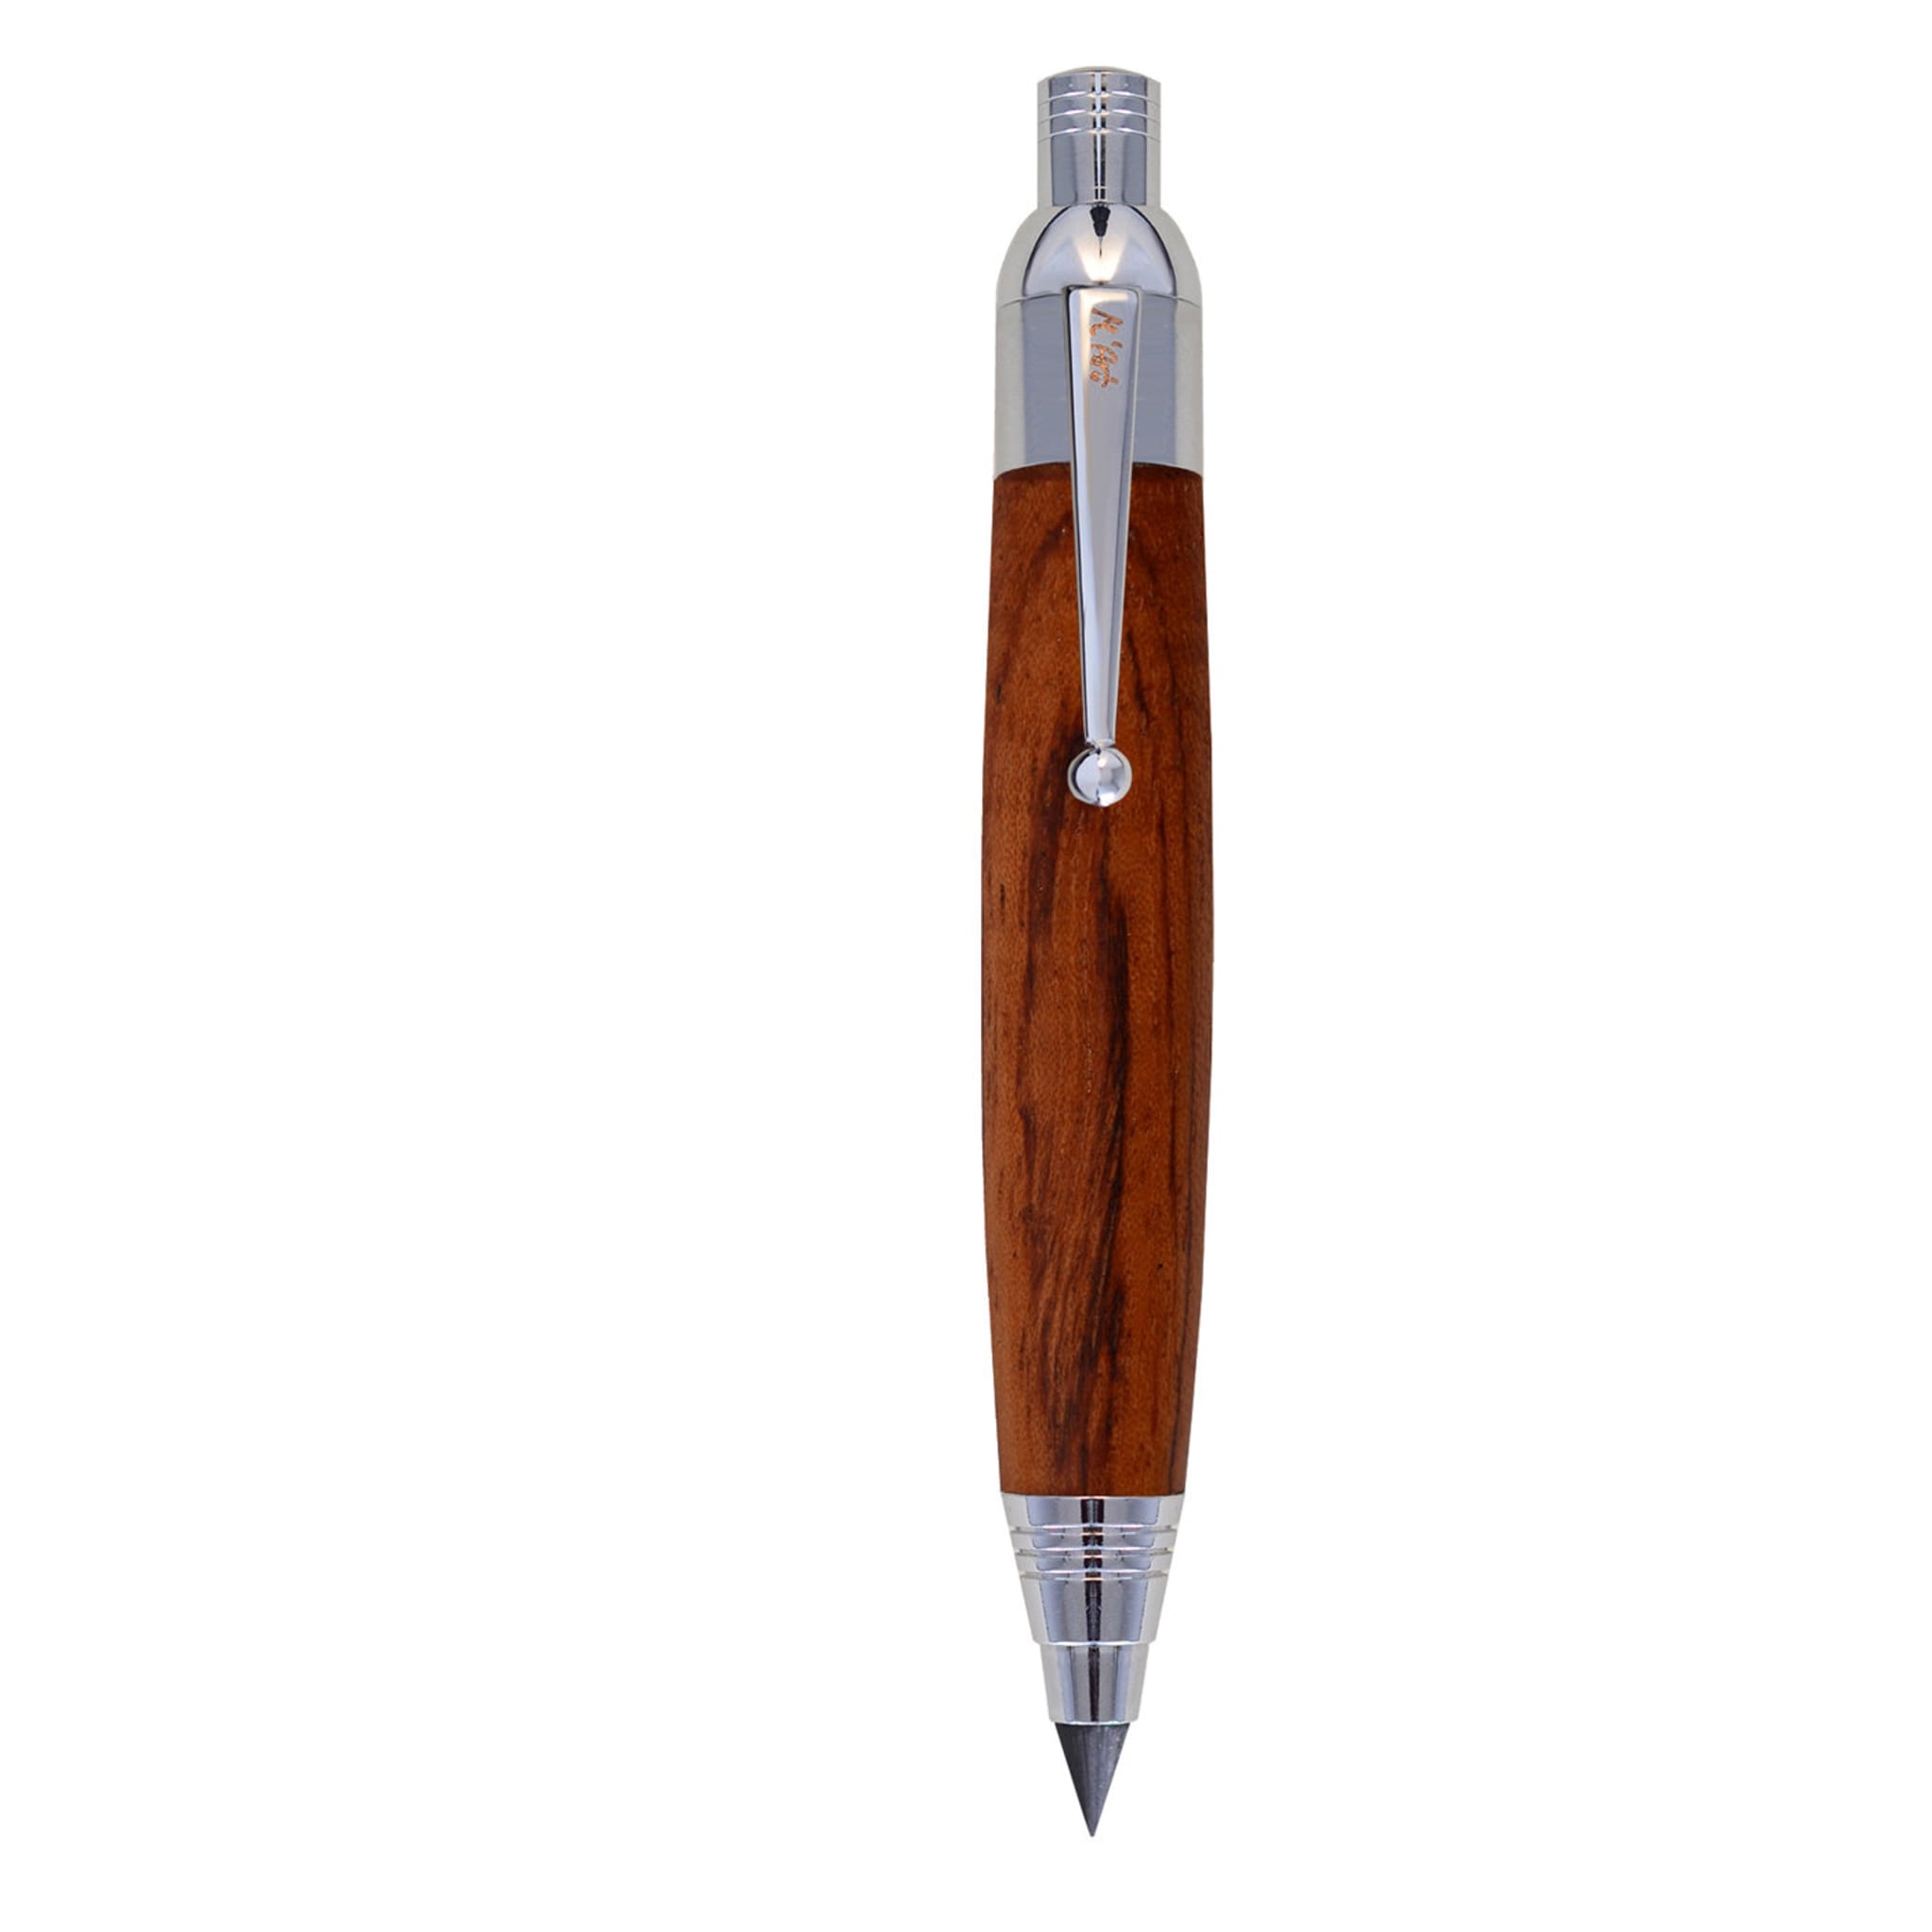 Botero Bleistift in Bubinga Holz - Hauptansicht